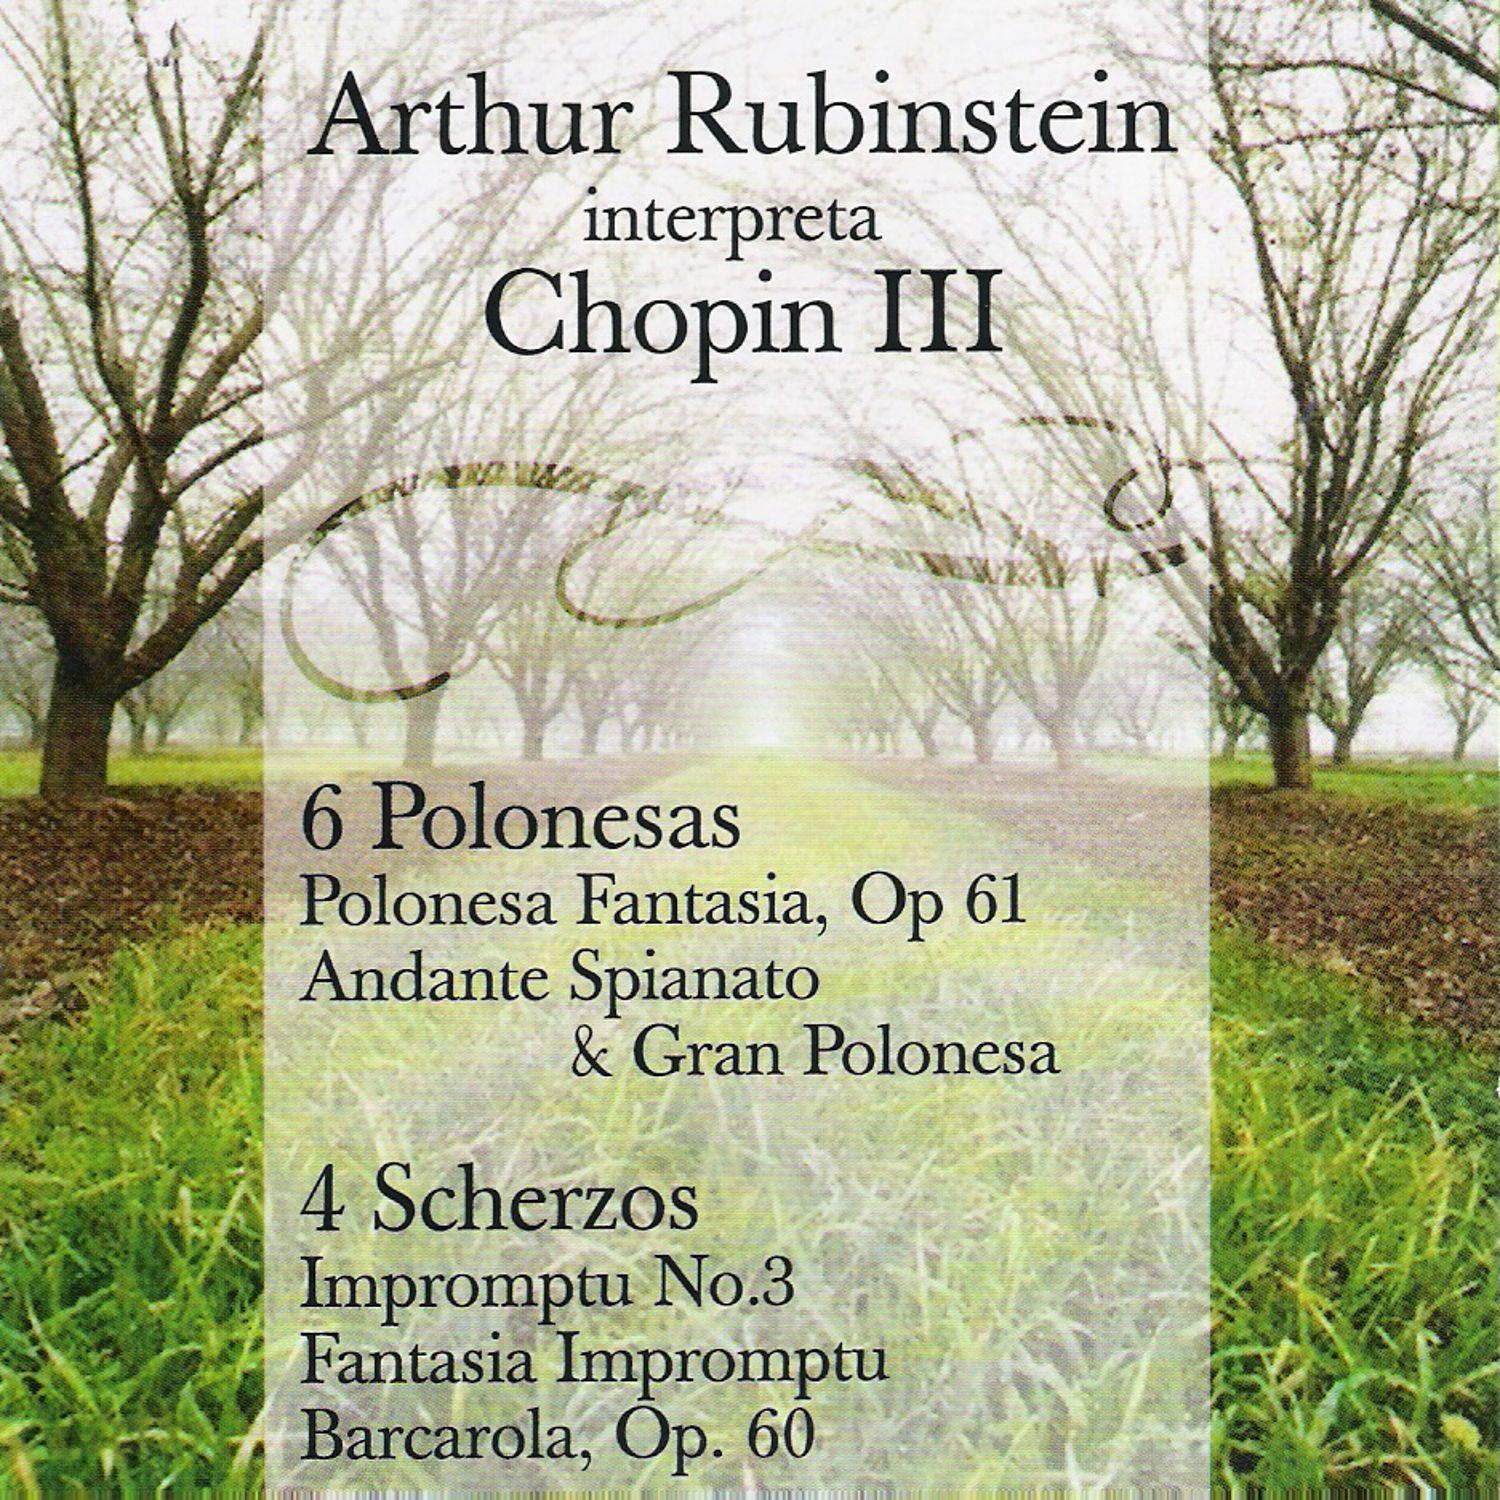 Arthur Rubinstein Interpreta Chopin Vol. III - 6 Polonesas 4 Scherzos